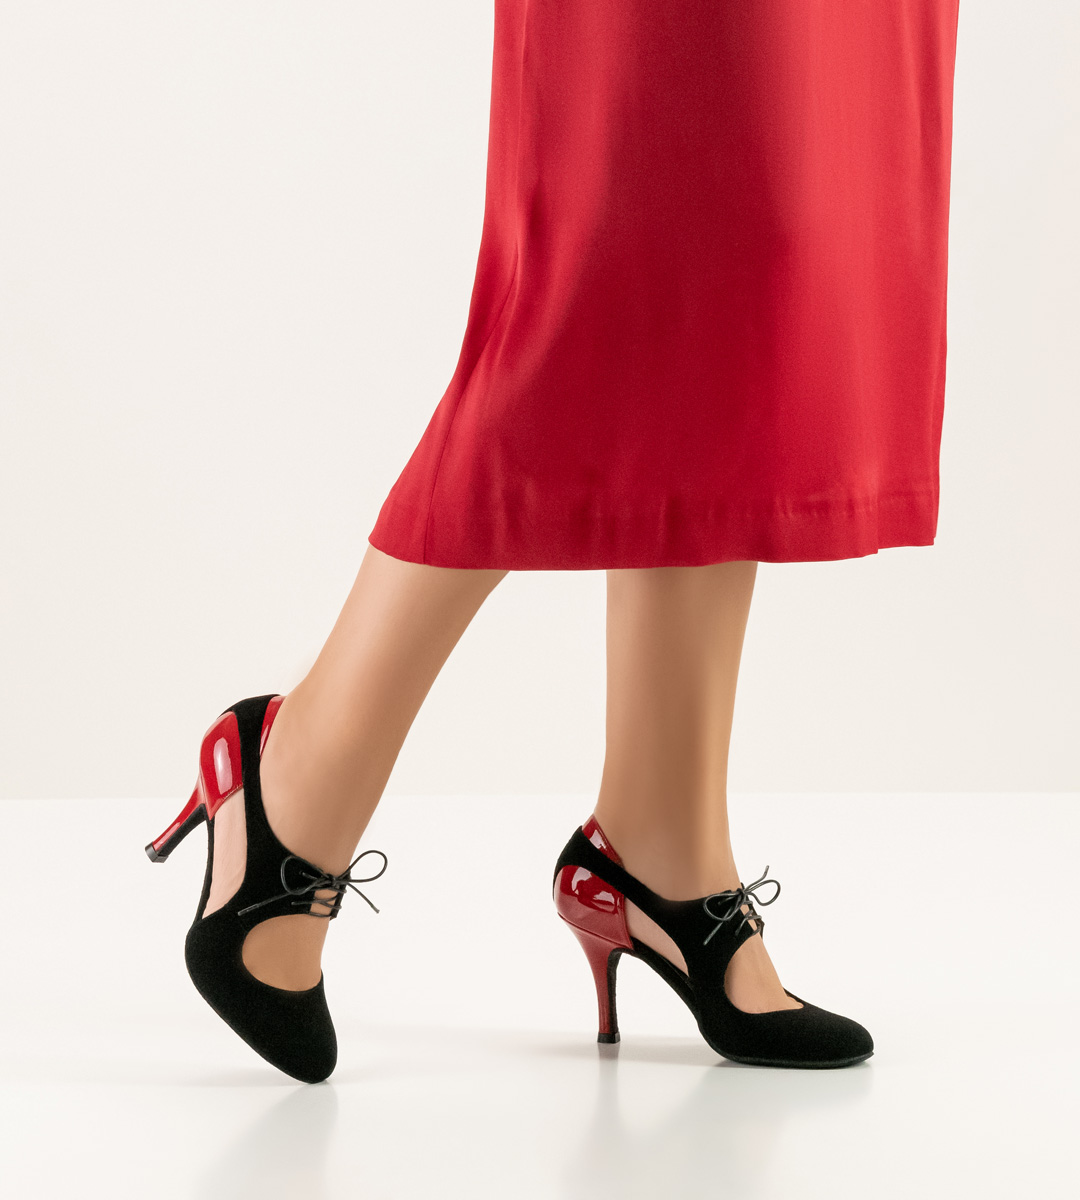 Red Dress with Closed Nueva Epoca Ladies Dance Shoe